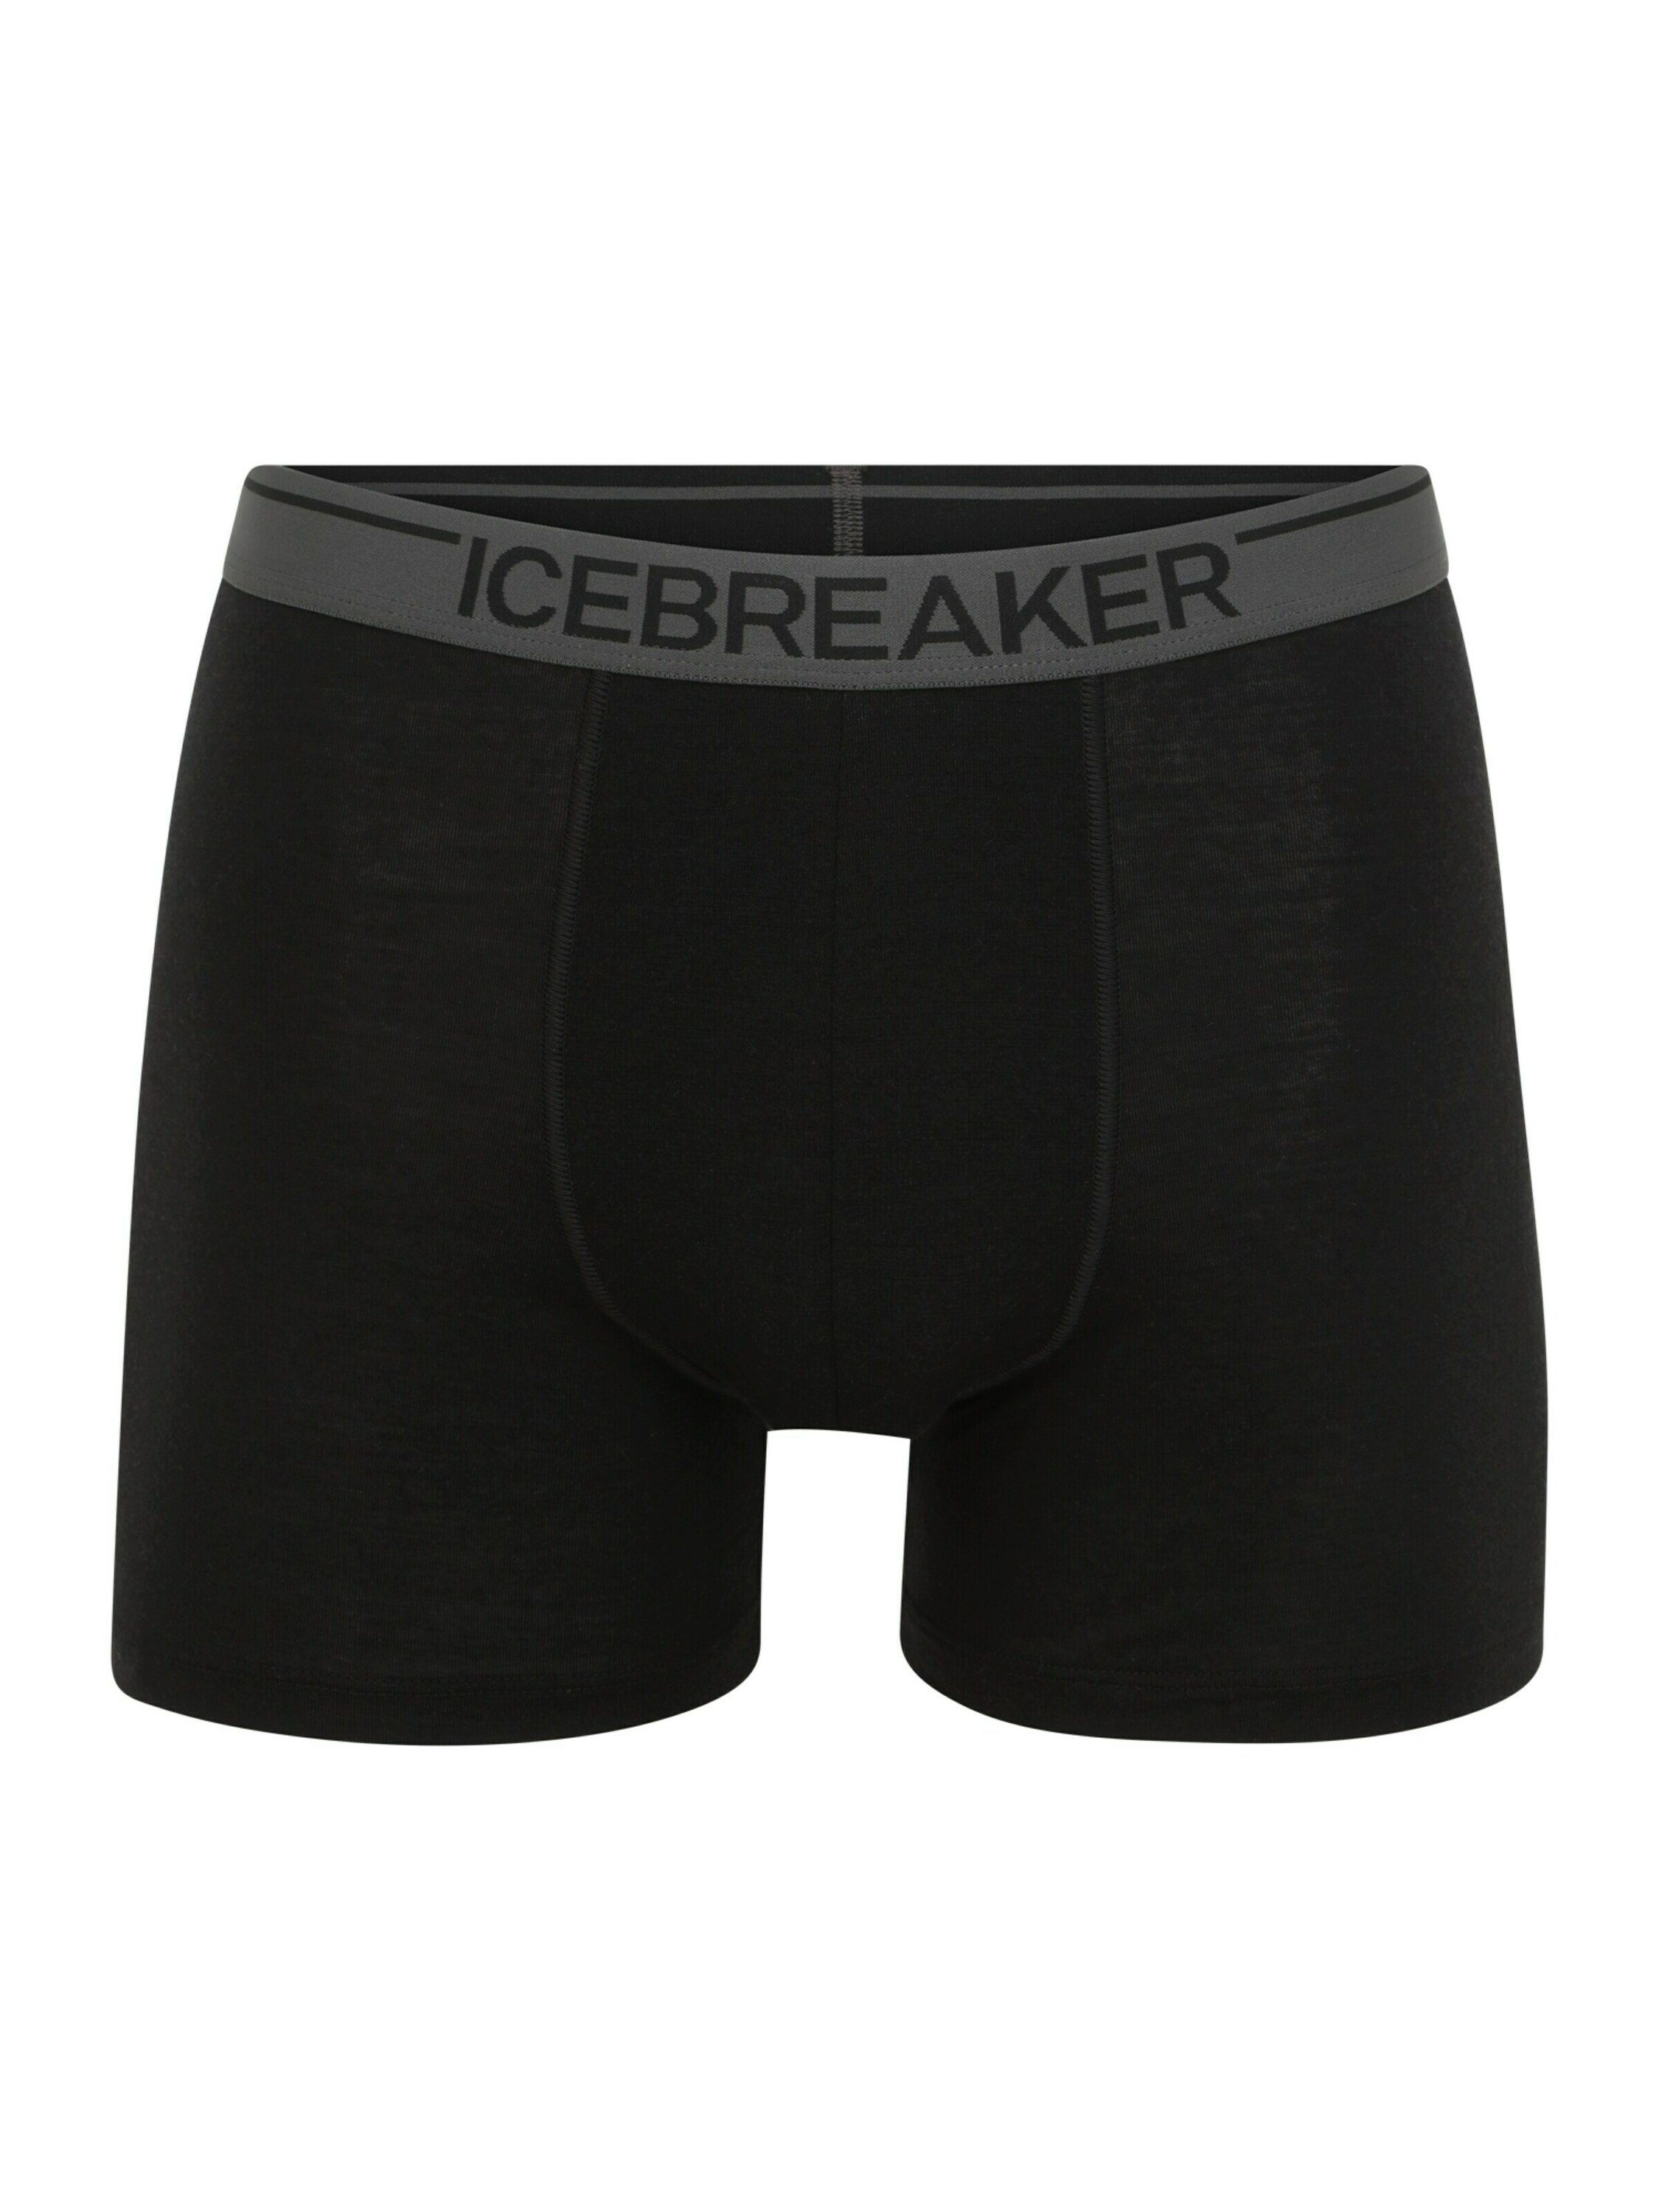 (1-St) Icebreaker Black Boxershorts Anatomica